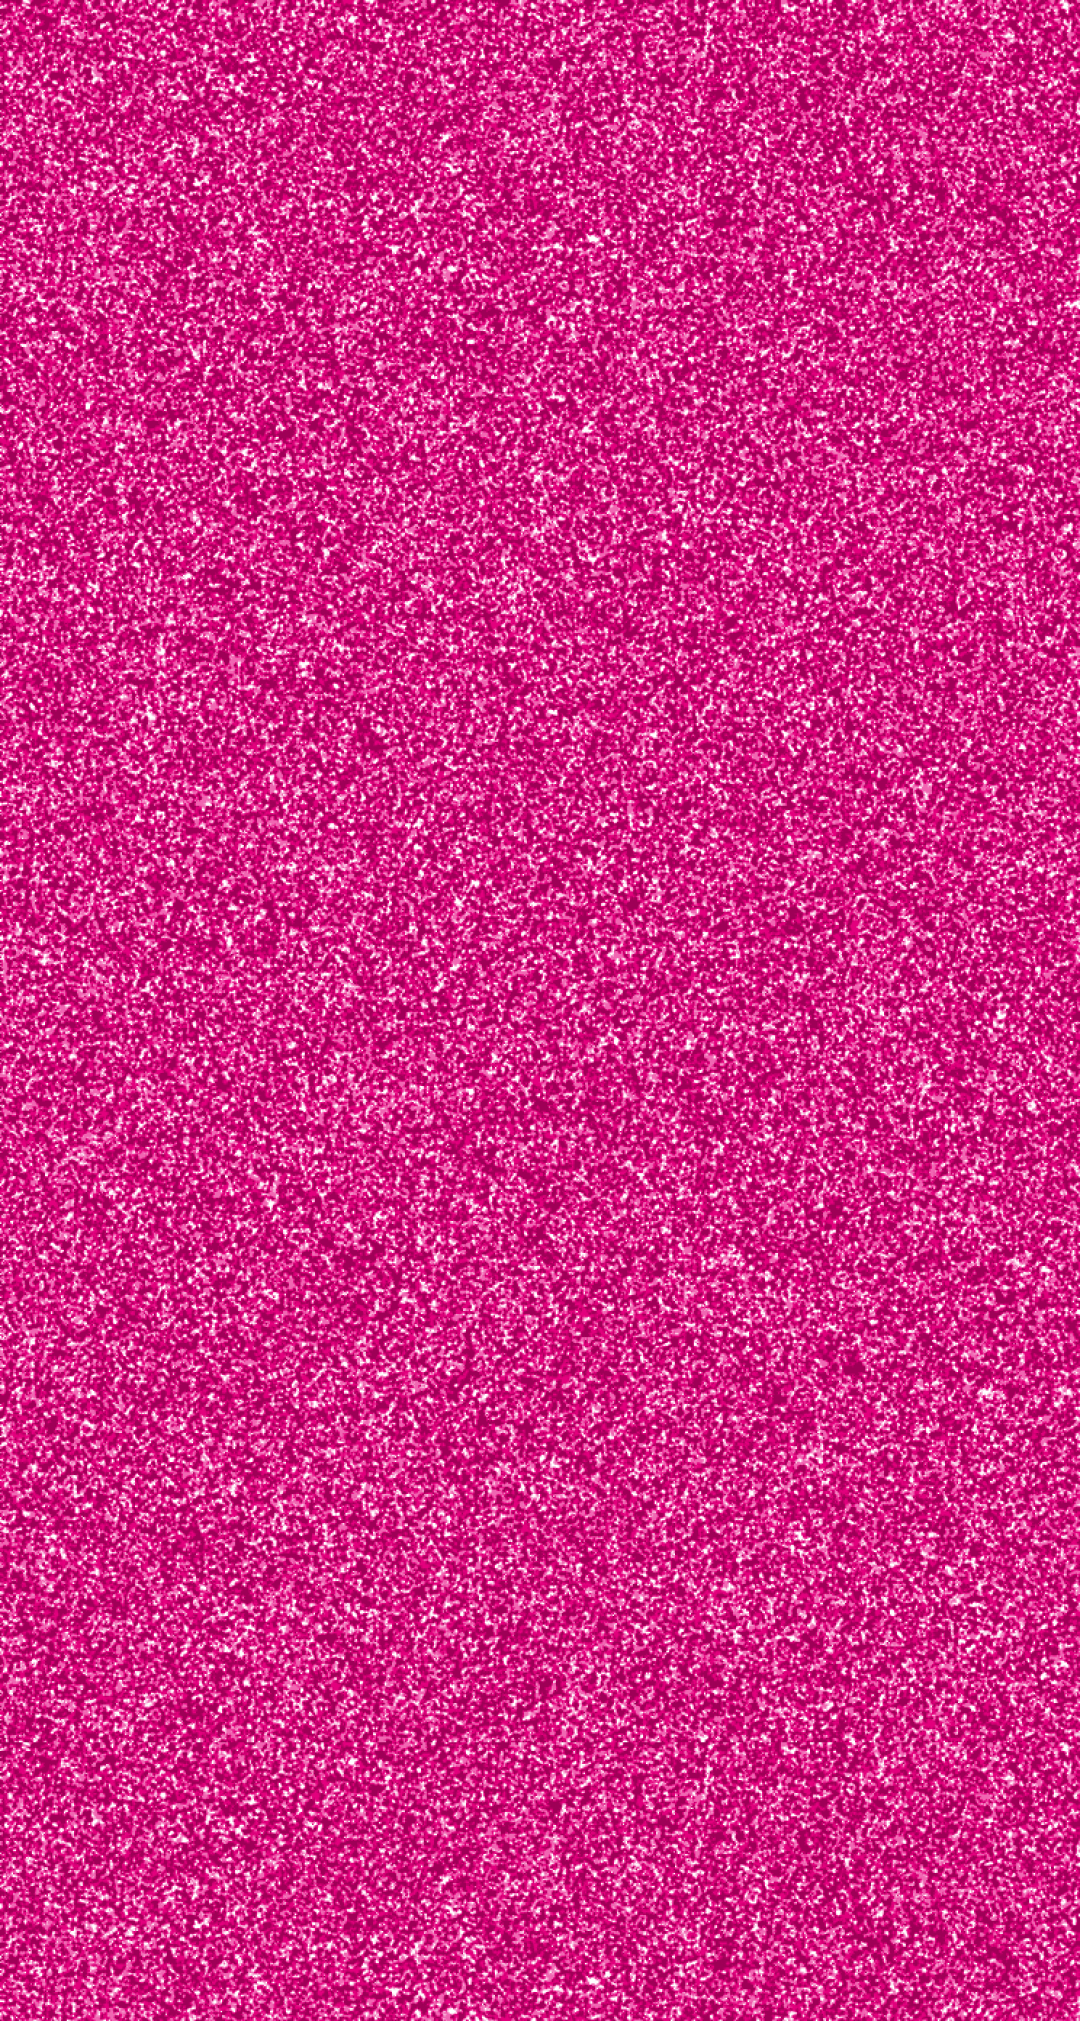 ✓[80+] Hot Pink Glitter, Sparkle, Glow Phone Wallpaper - Background -  Android / iPhone HD Wallpaper Background Download (png / jpg) (2023)